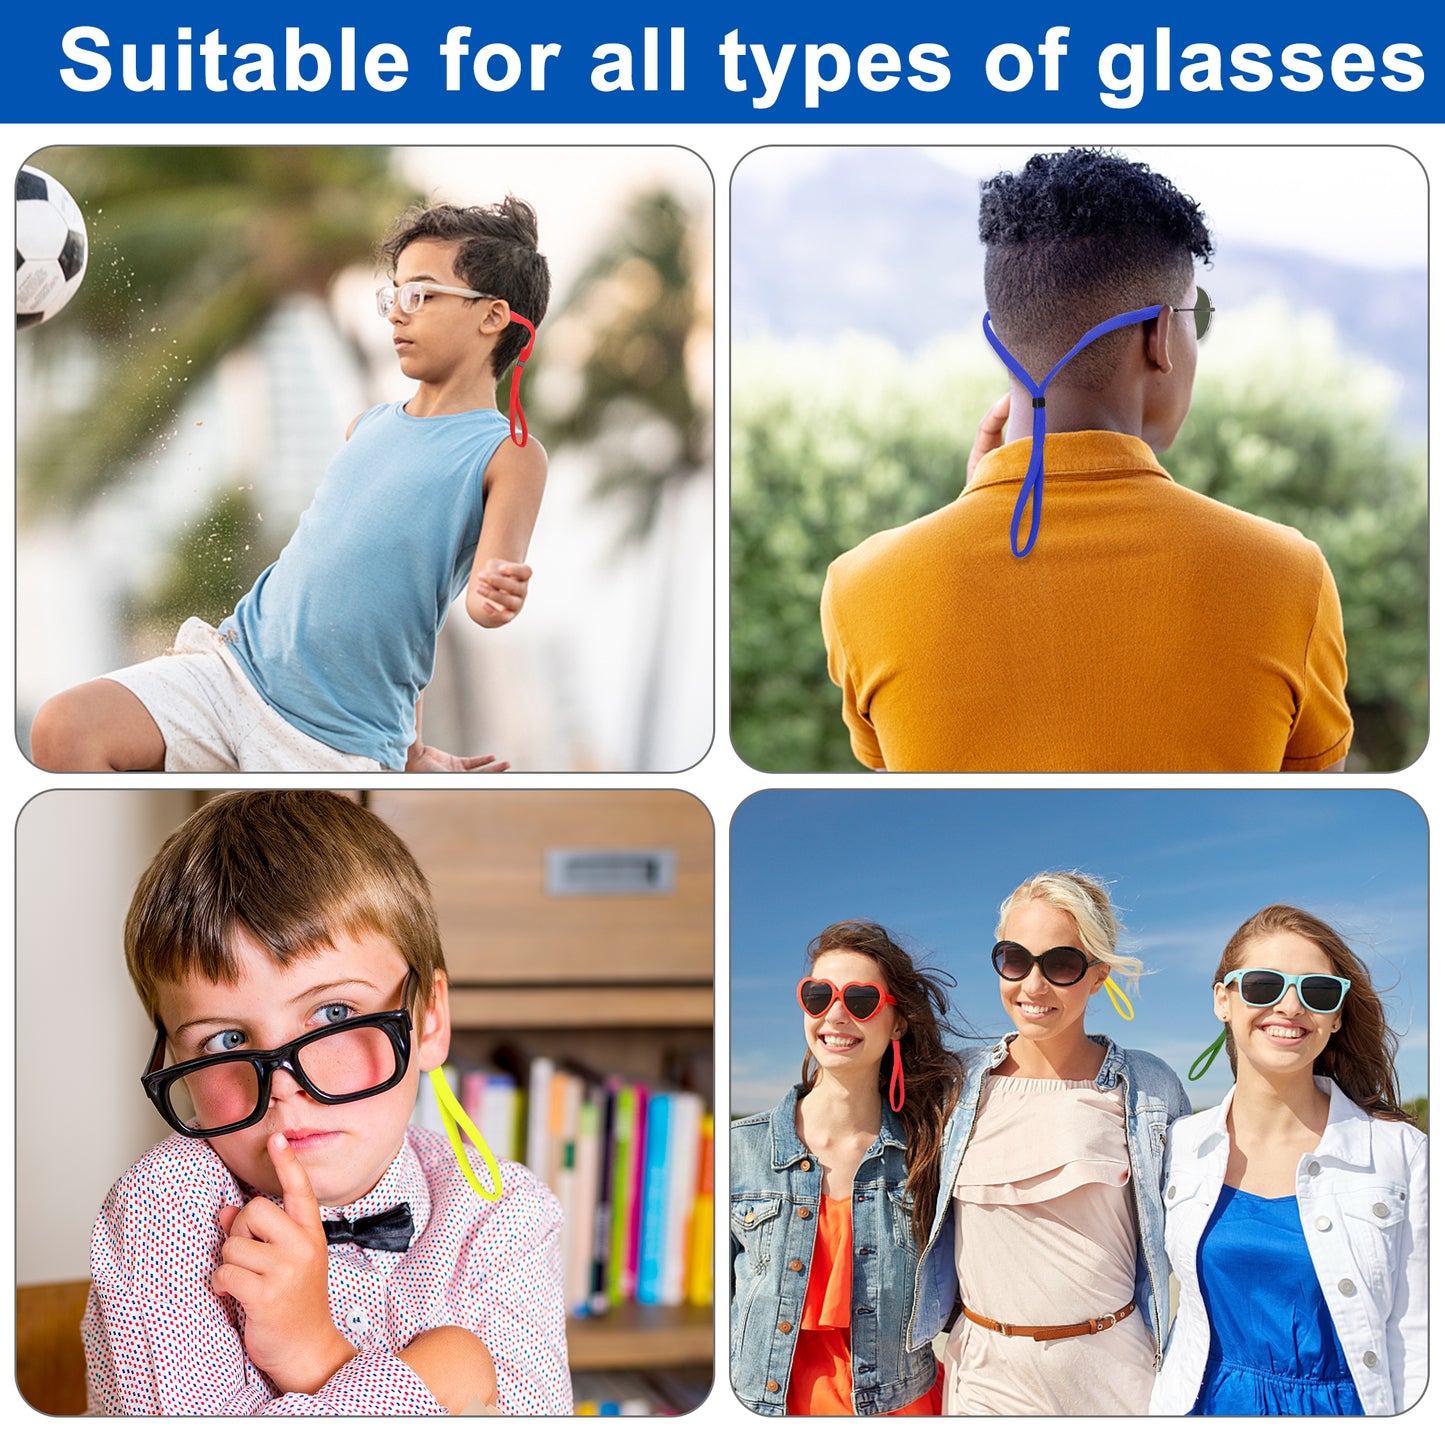 6pcs Fashion Adjustable Glasses Straps - Universal 12 -19in Chain Sport Glasses Cord Eyewear Strap Lanyard Glasses Rope